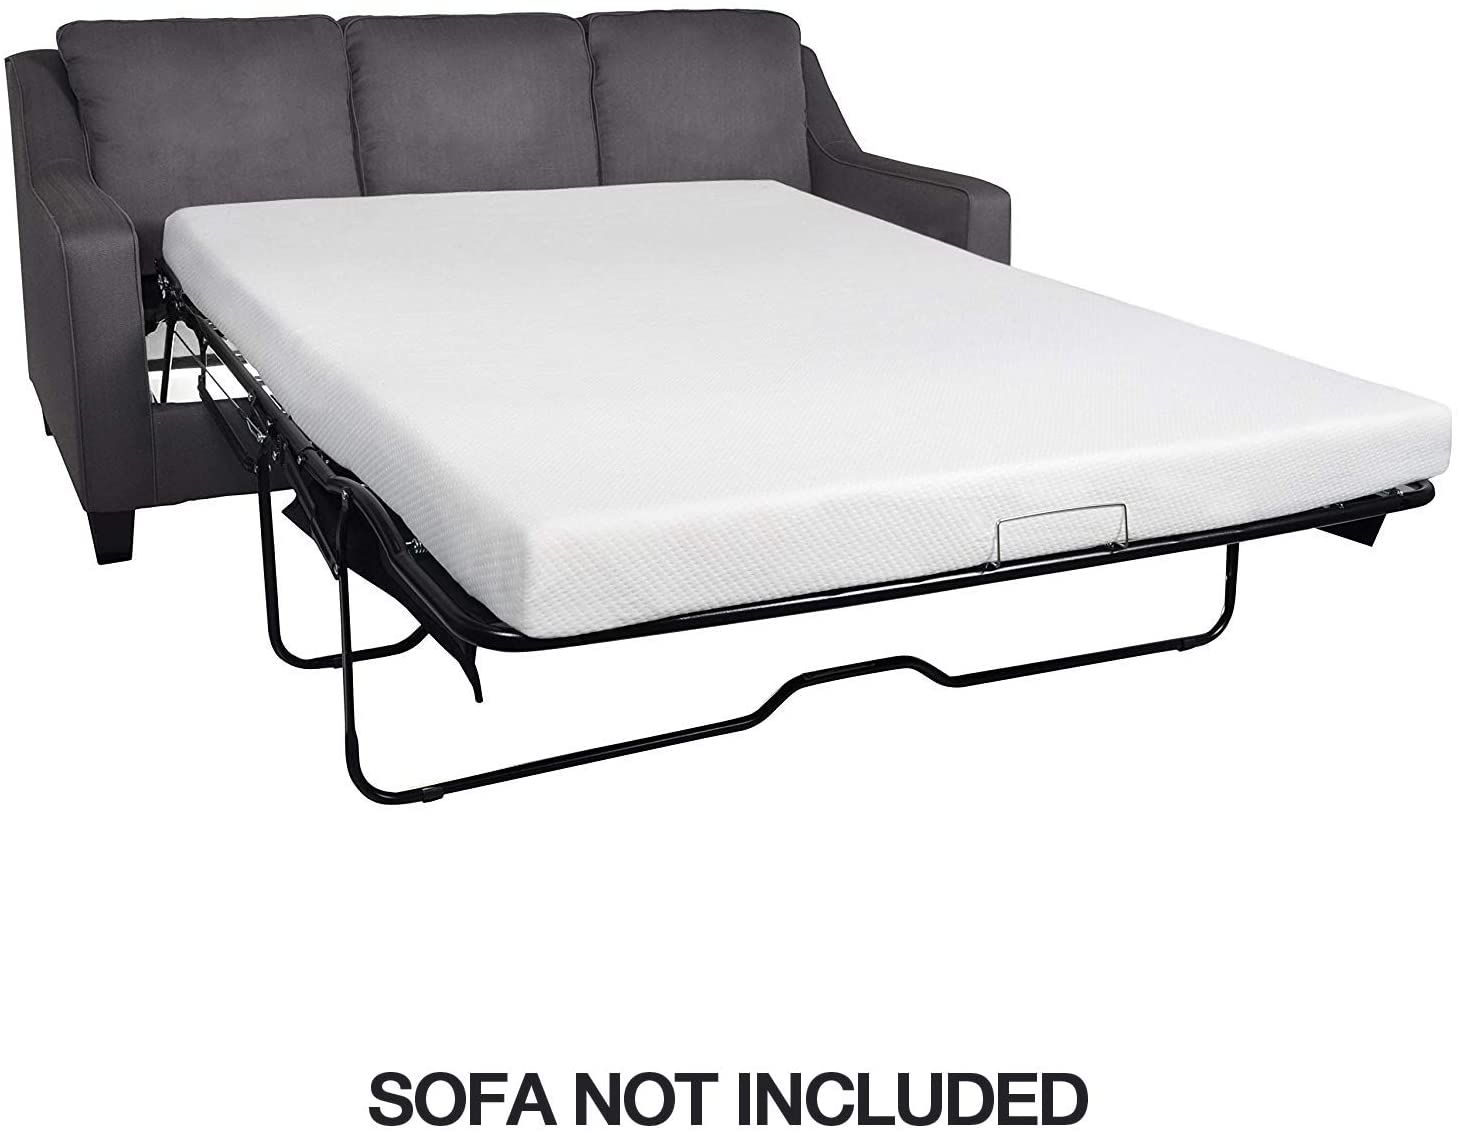 sofa bed firm replacement mattress